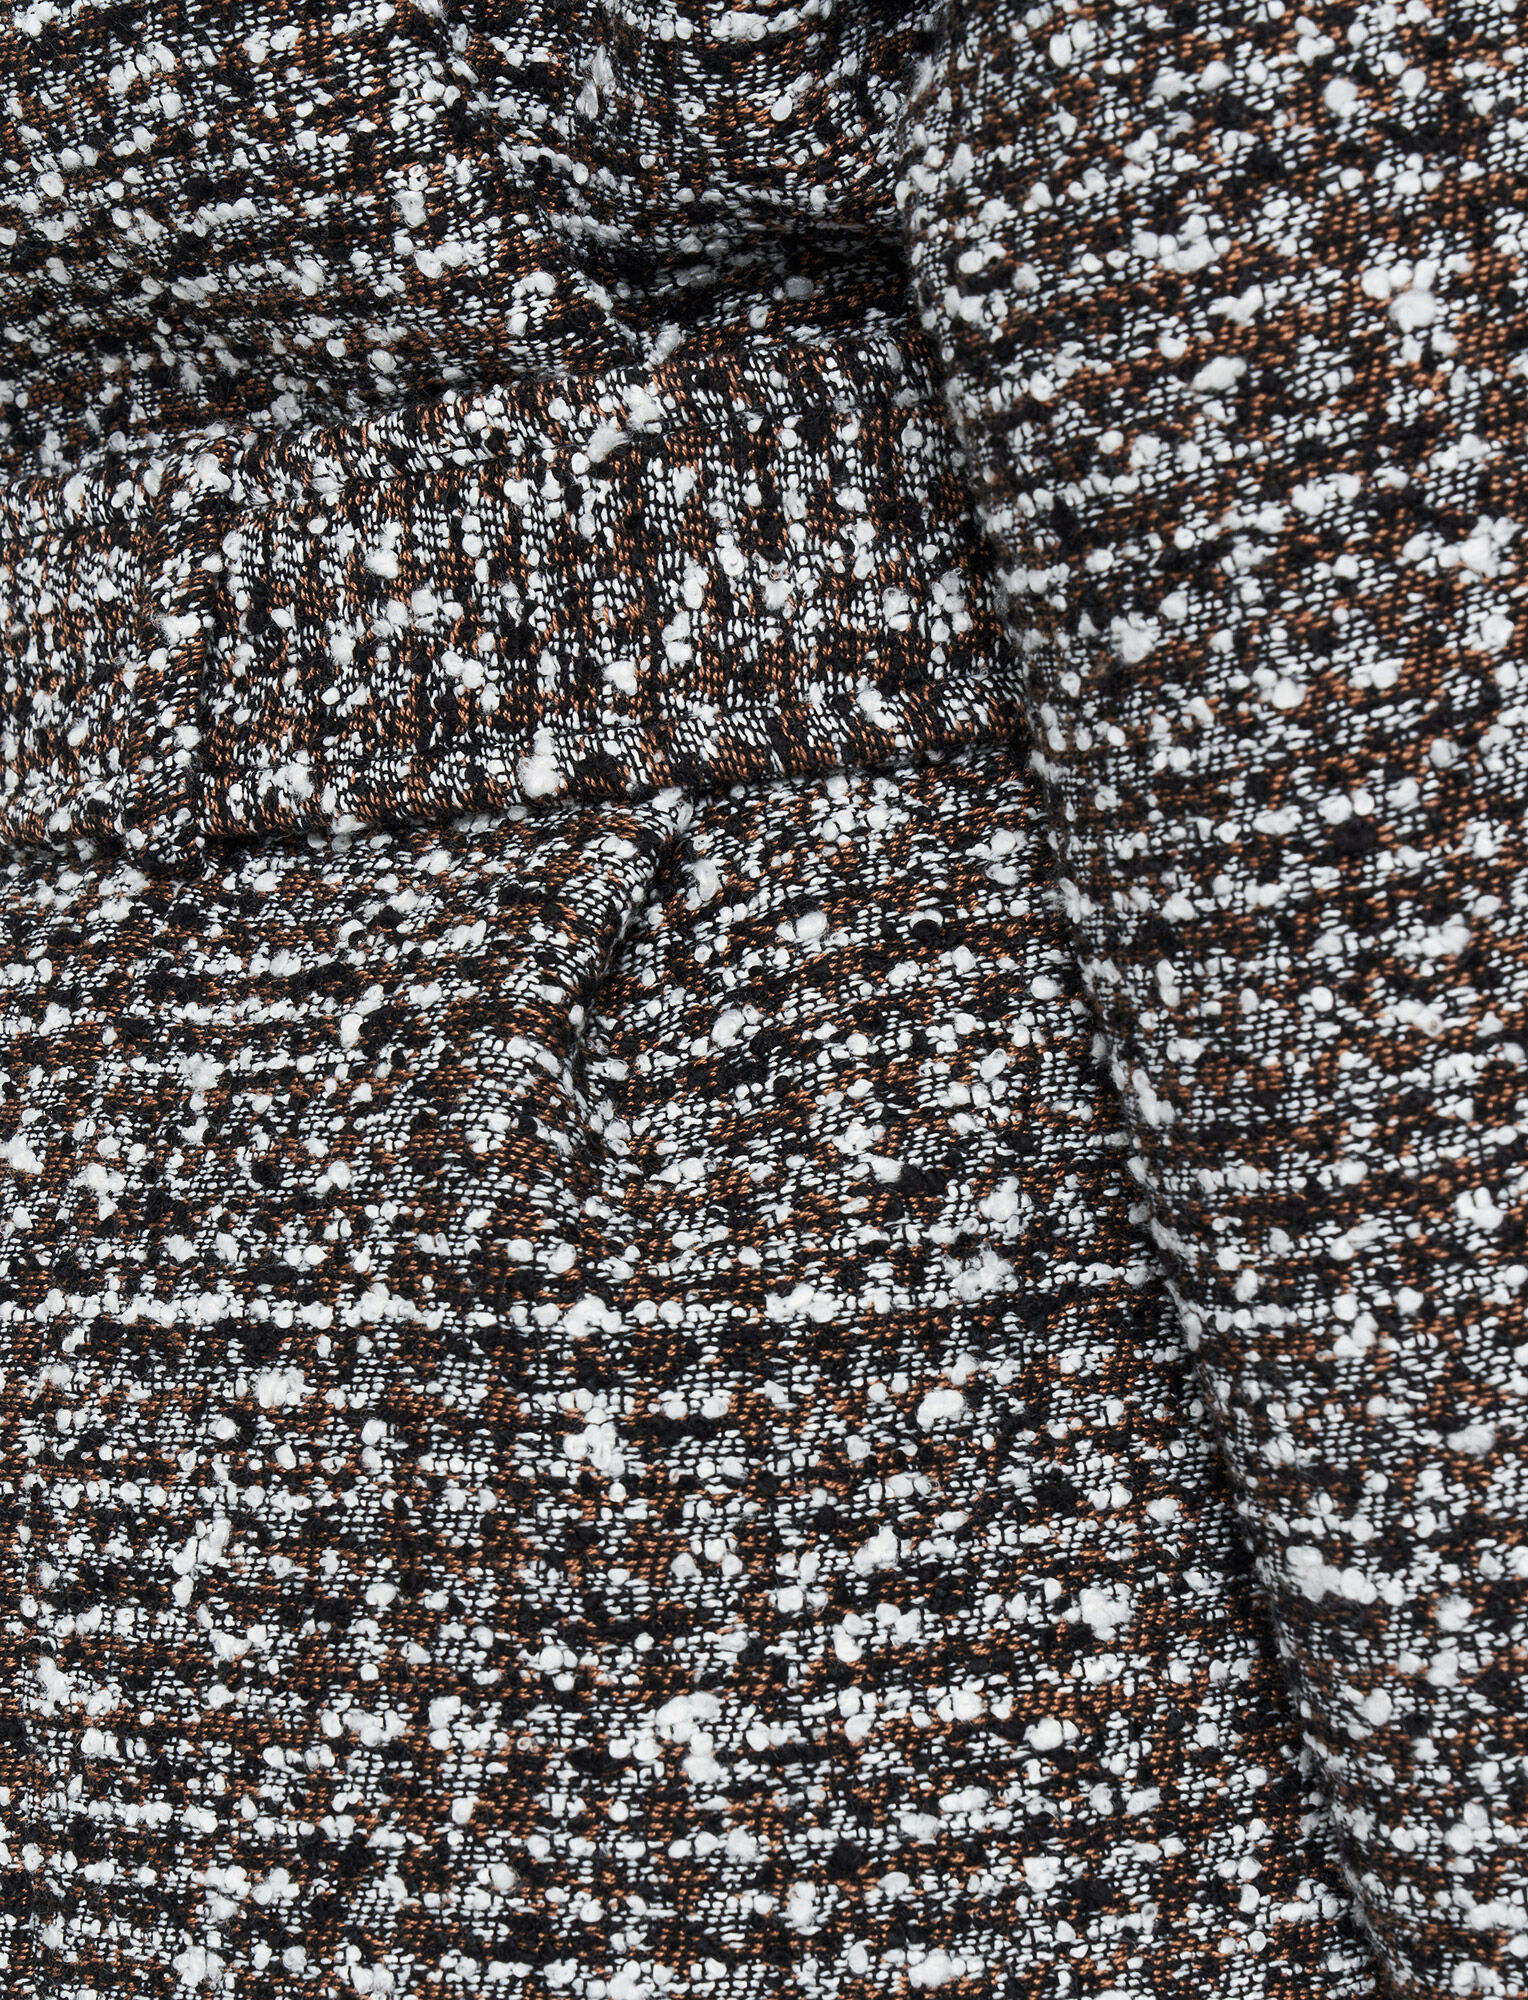 Joseph, Wool Tweed Clery Coat, in Black Combo